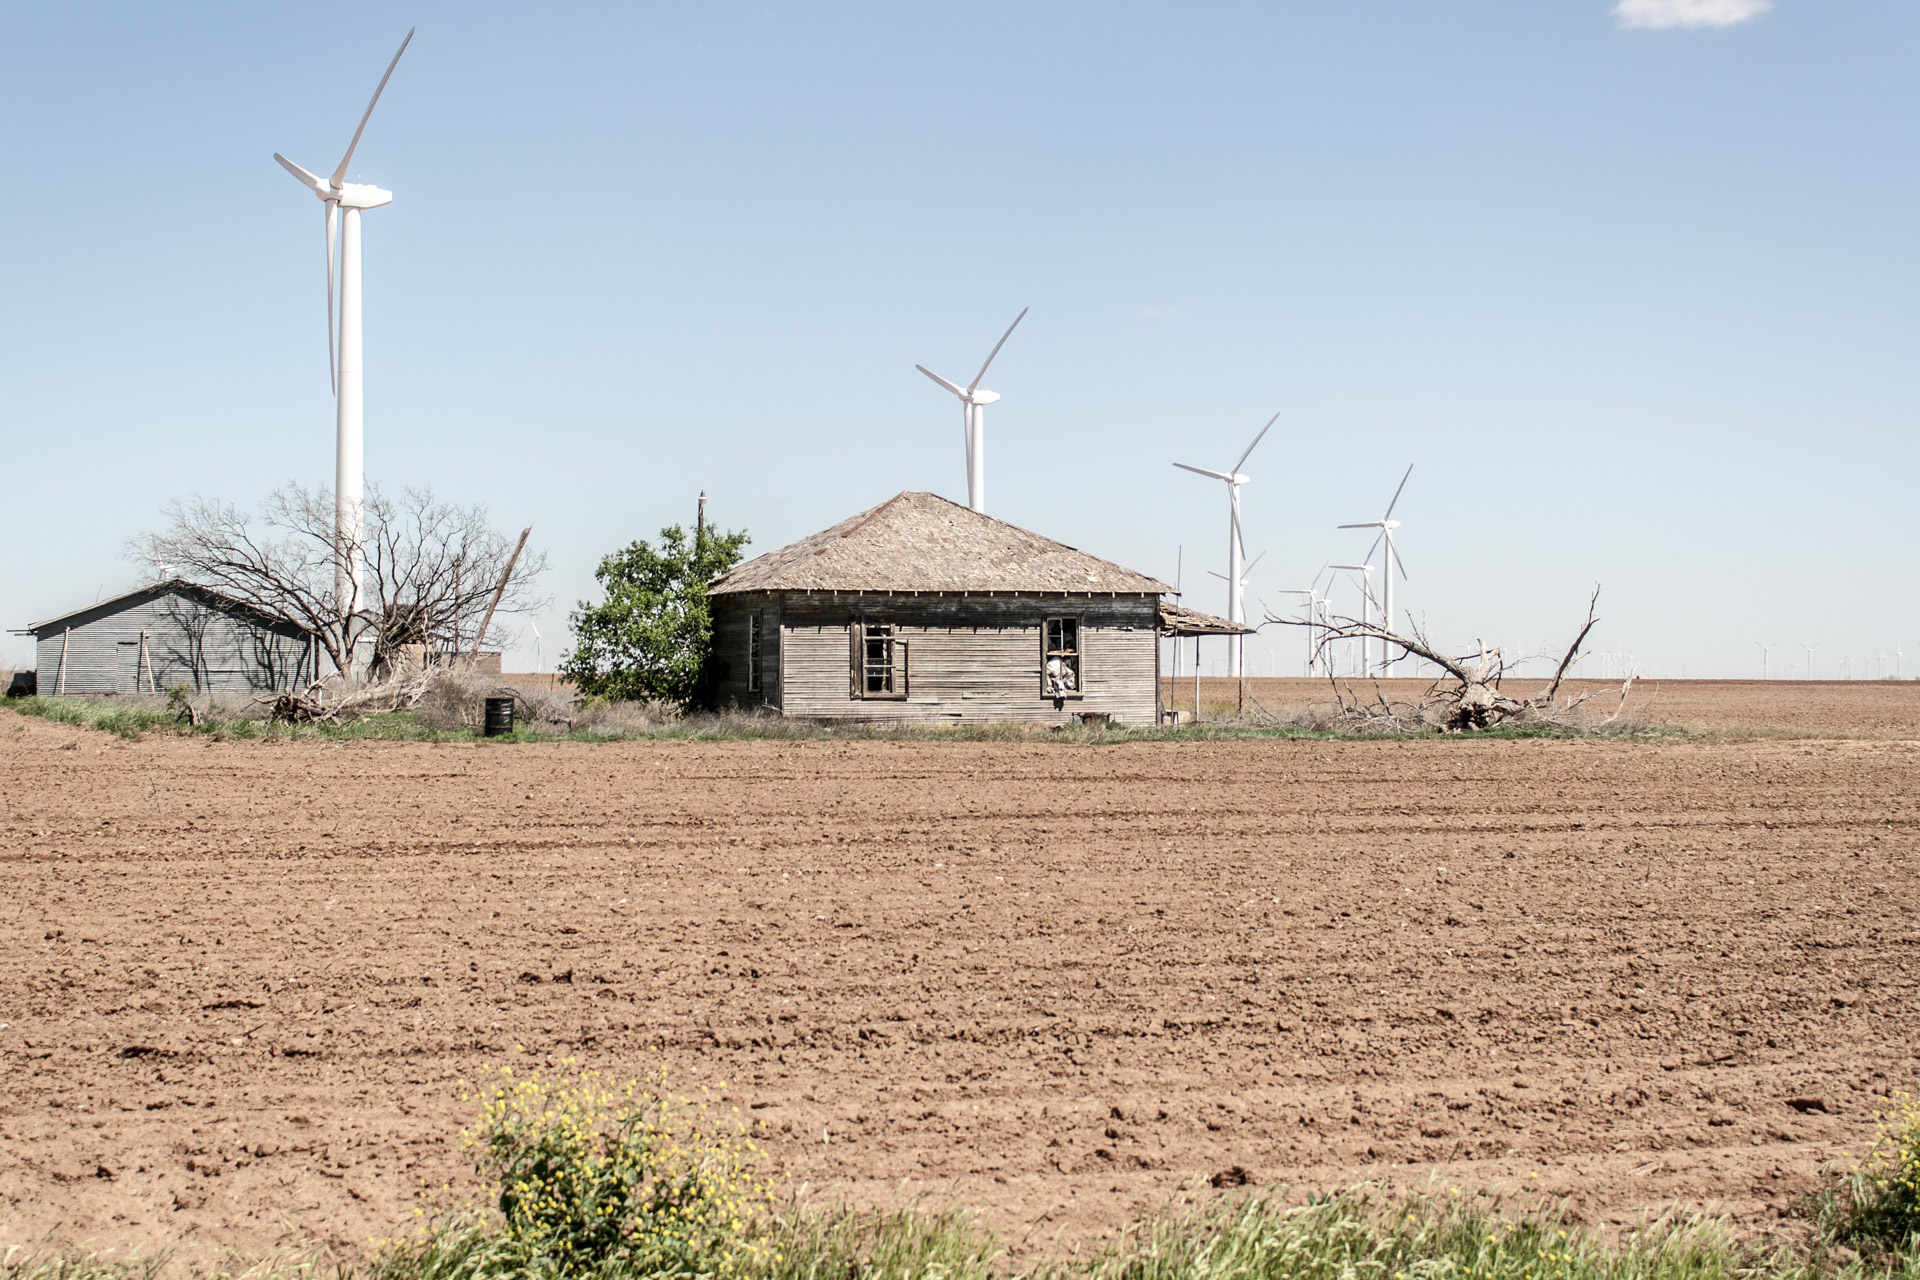 Wind Turbine Community Storage House (angle left far)